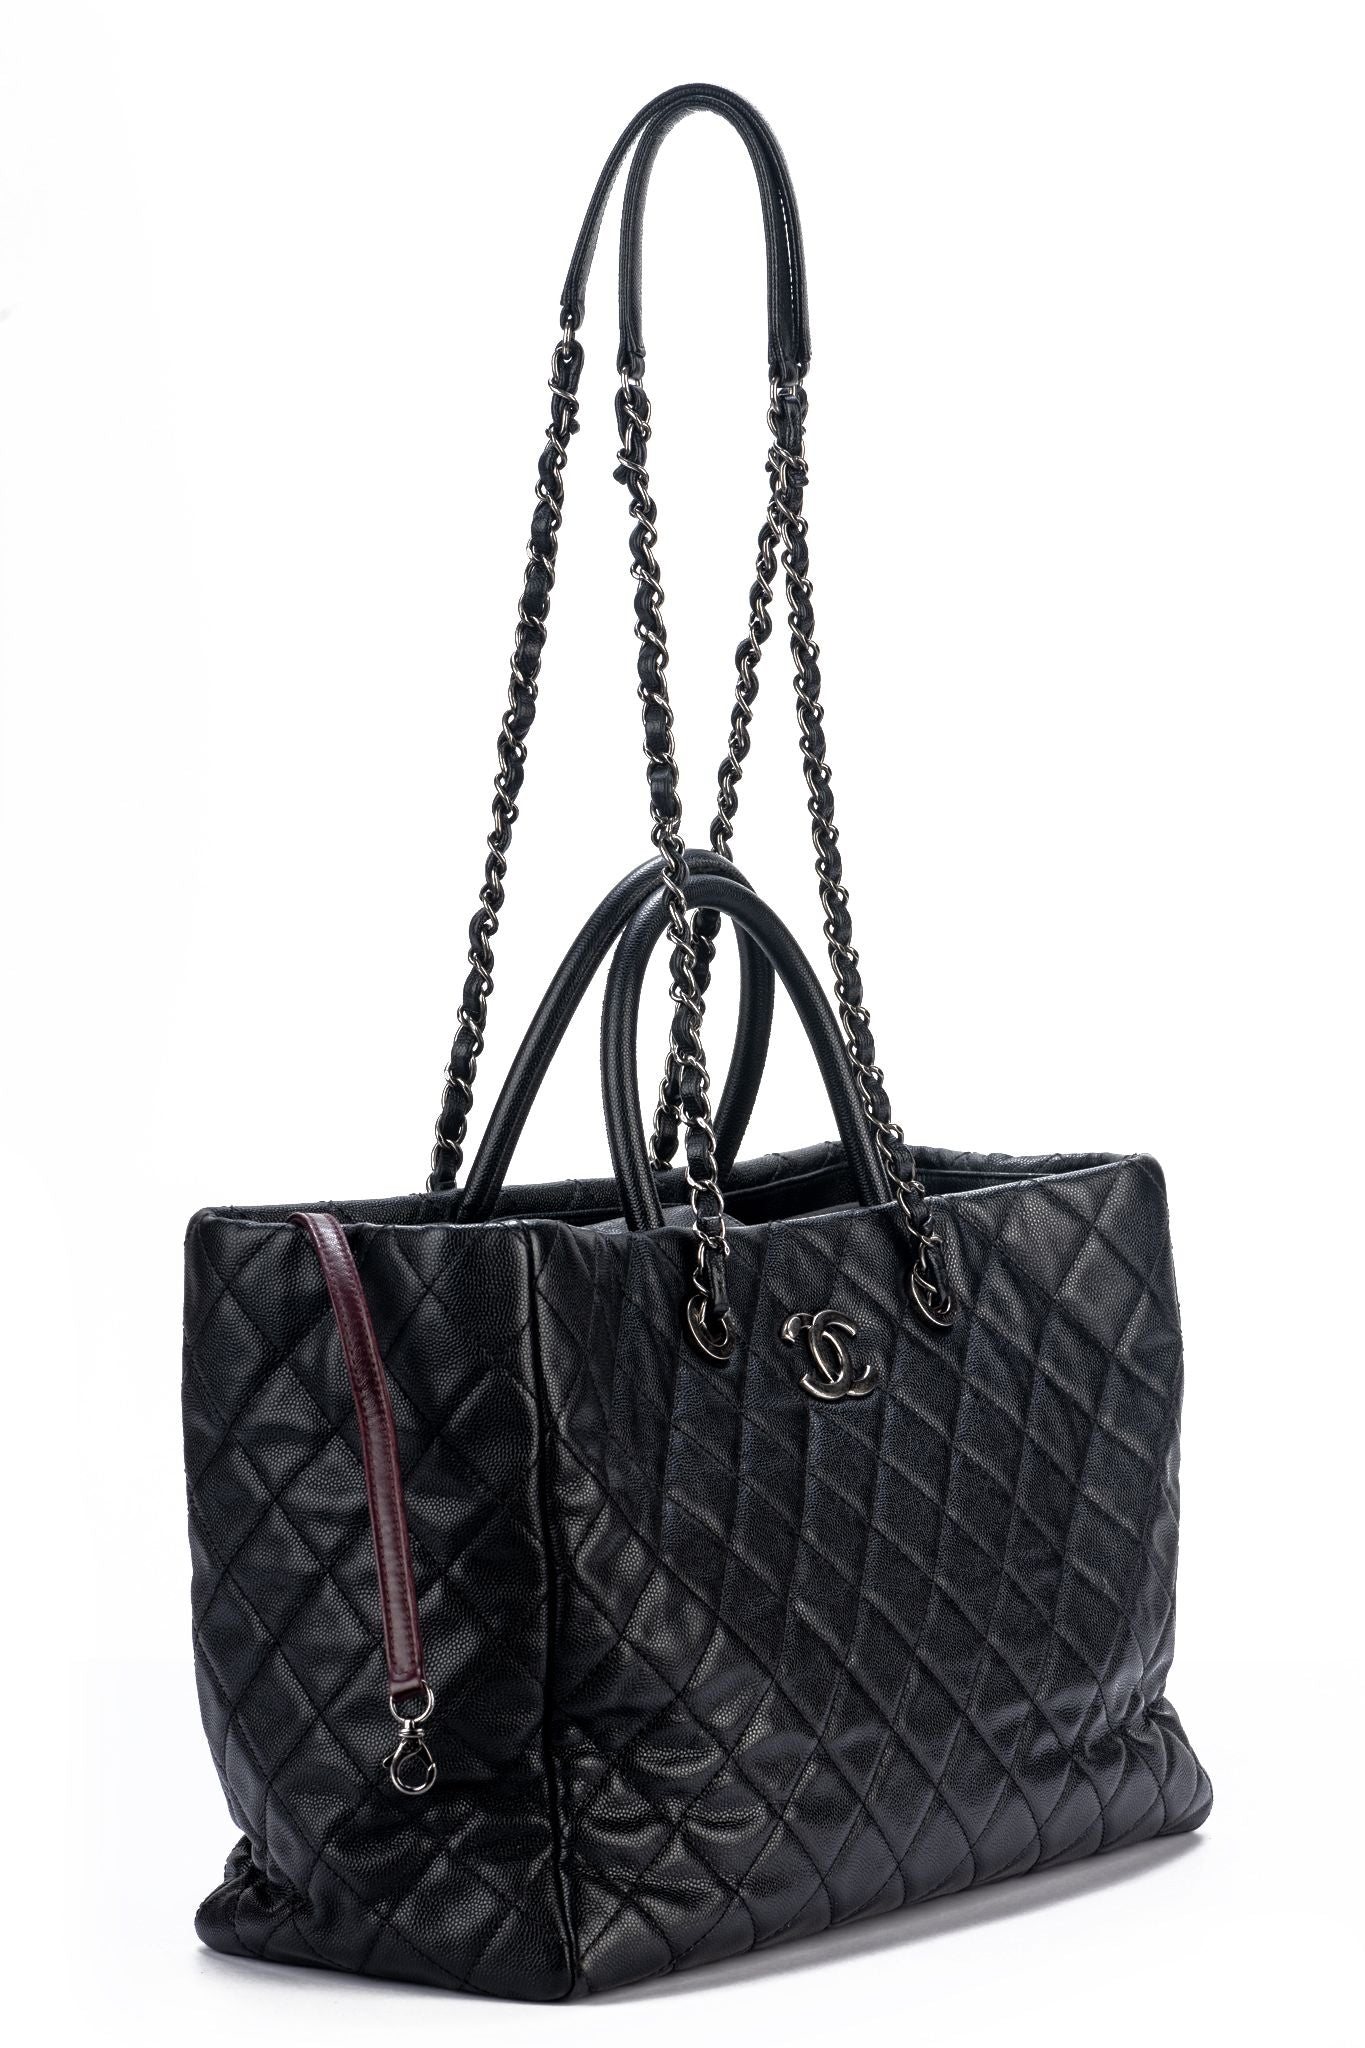 chanel black purse authentic